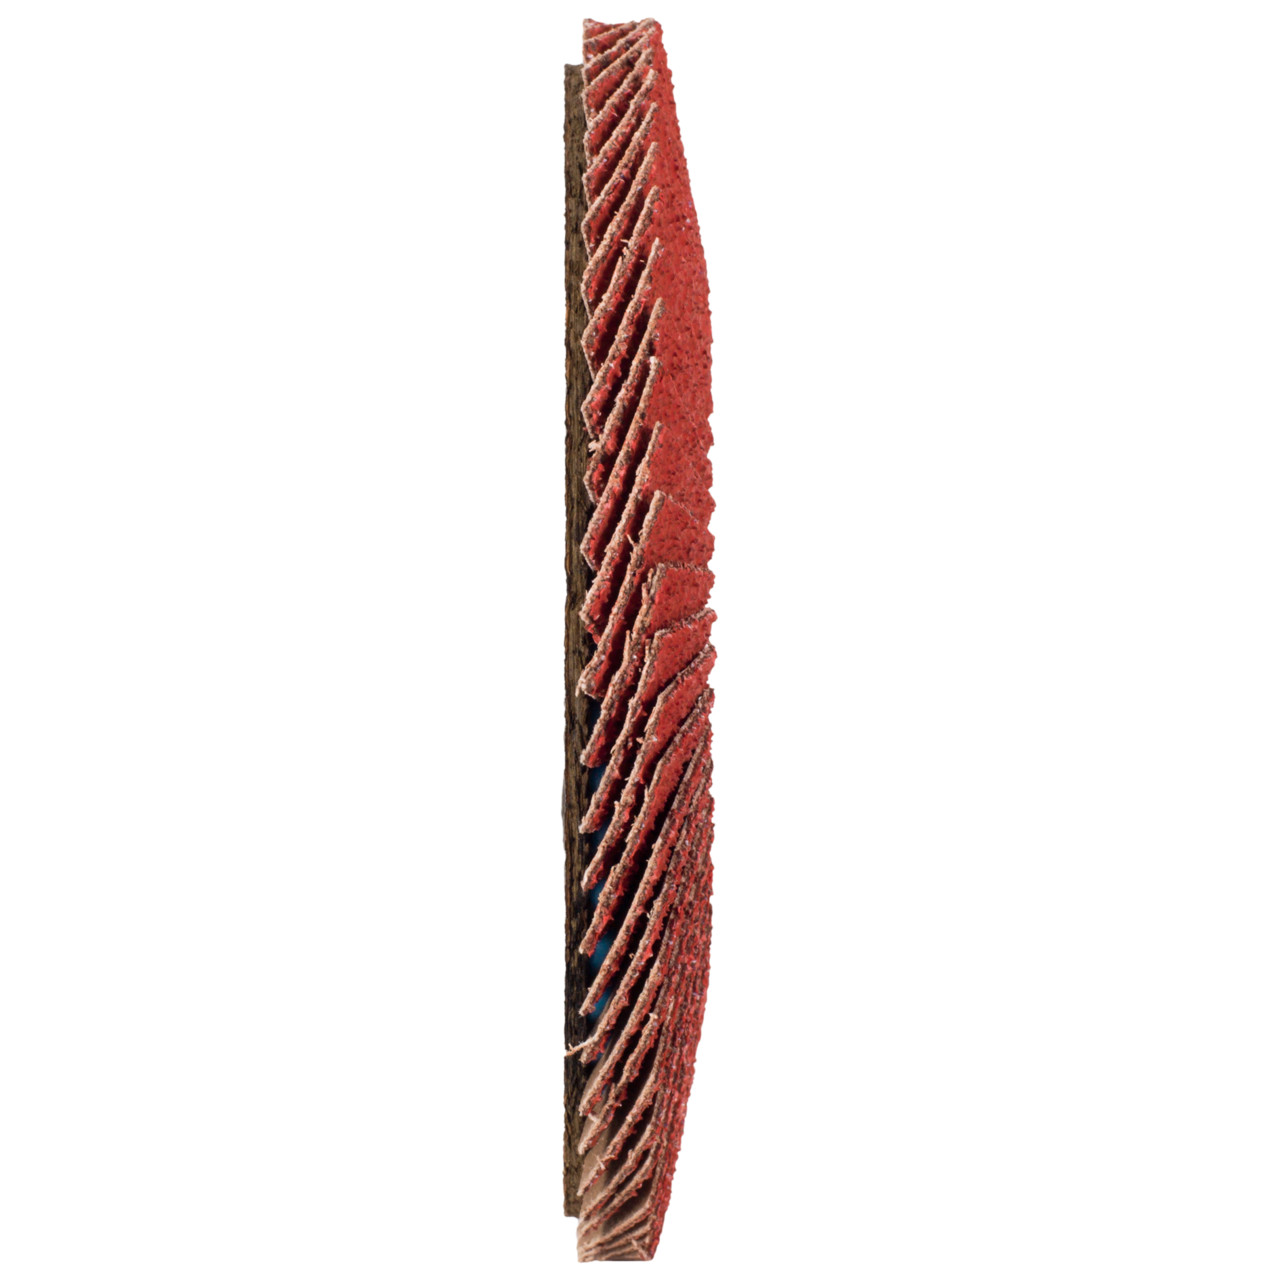 Tyrolit Gekartelde borgring DxH 115x22,23 CERABOND gekartelde borgring voor roestvrij staal, P40, vorm: 27A - geslingerde versie (glasvezeldragerhuisversie), Art. 34043514